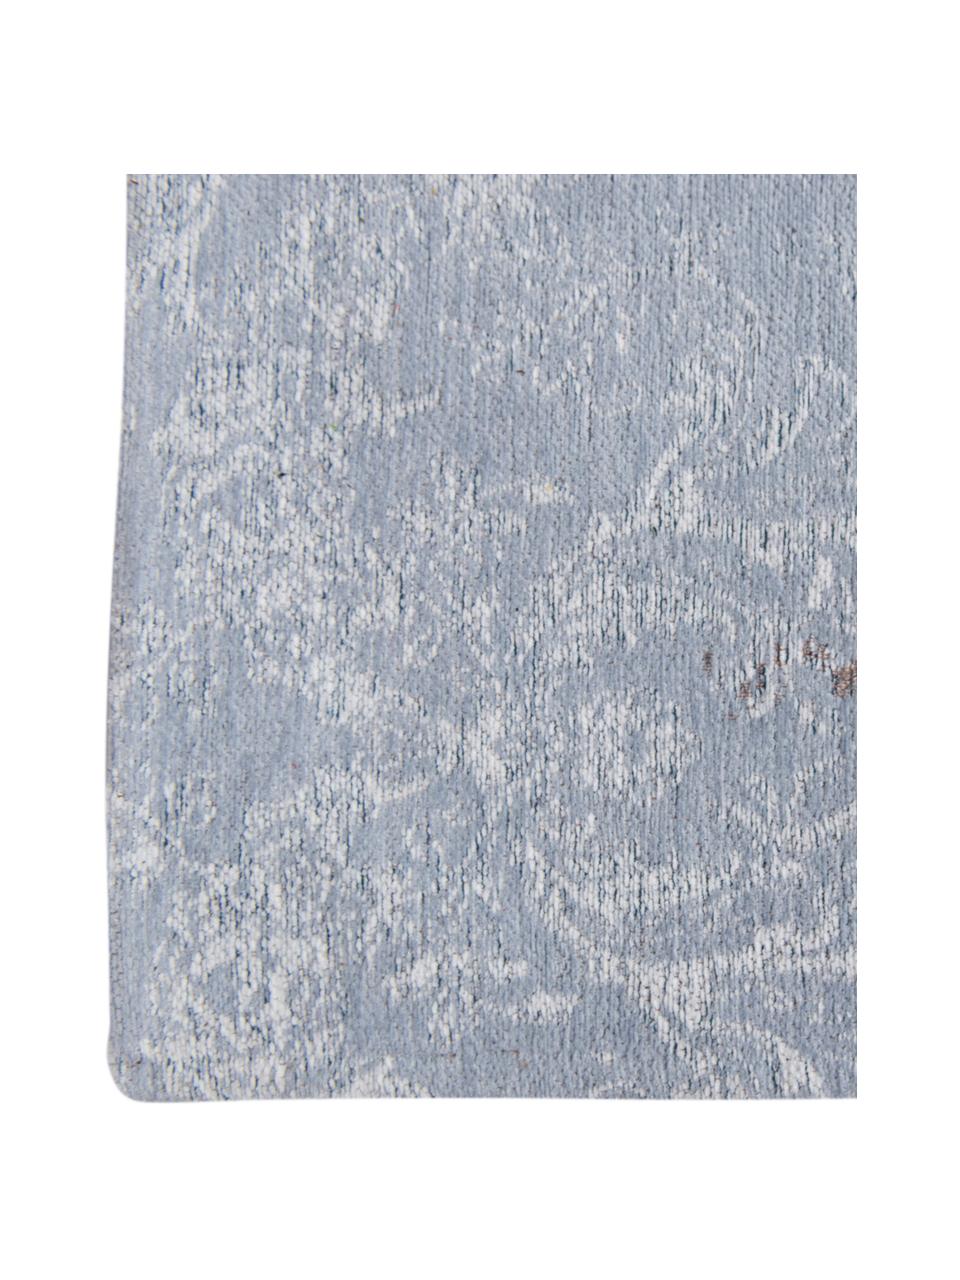 Ženilkový koberec s patchwork dizajnom Multi, Modrá, sivá